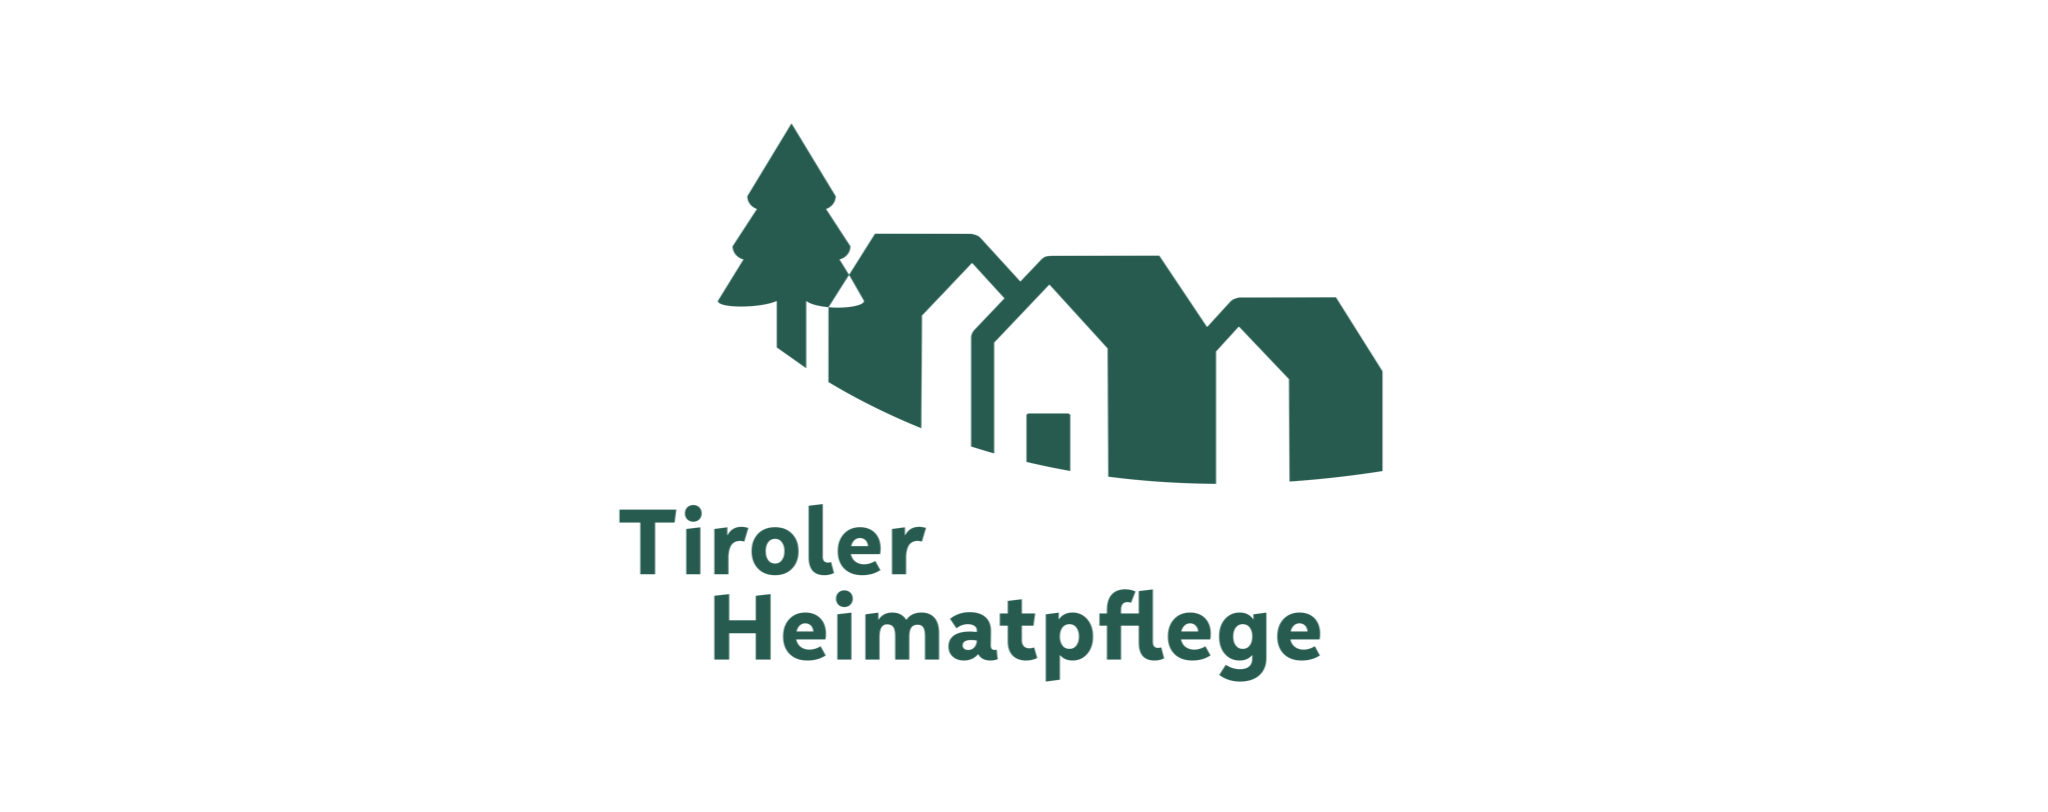 Tiroler Heimatpflege